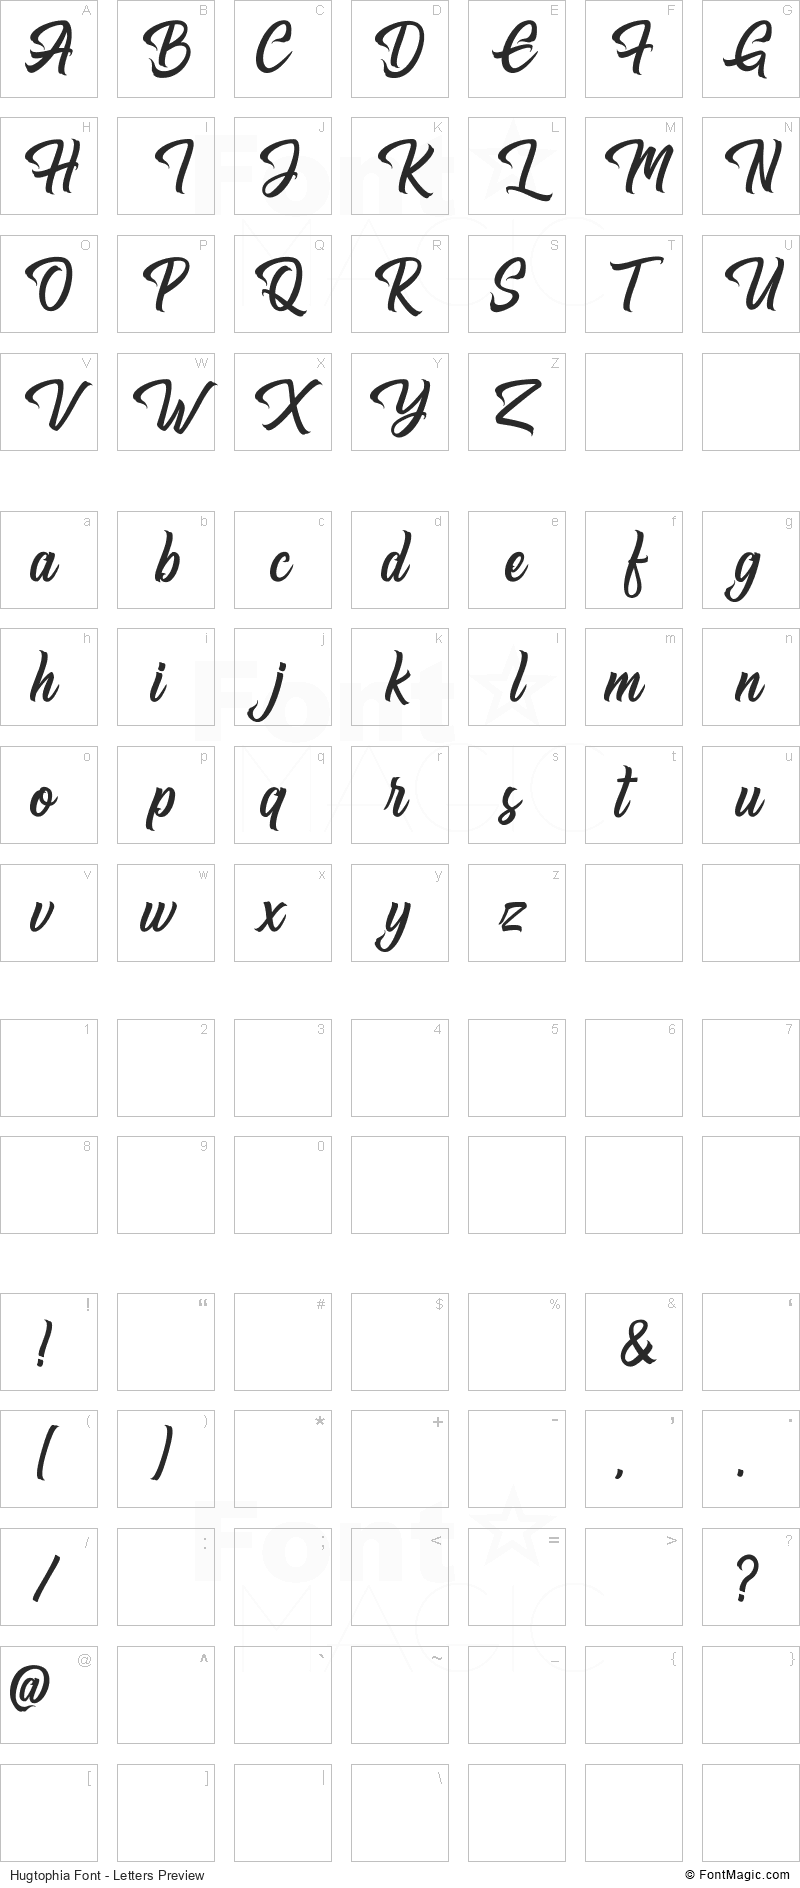 Hugtophia Font - All Latters Preview Chart